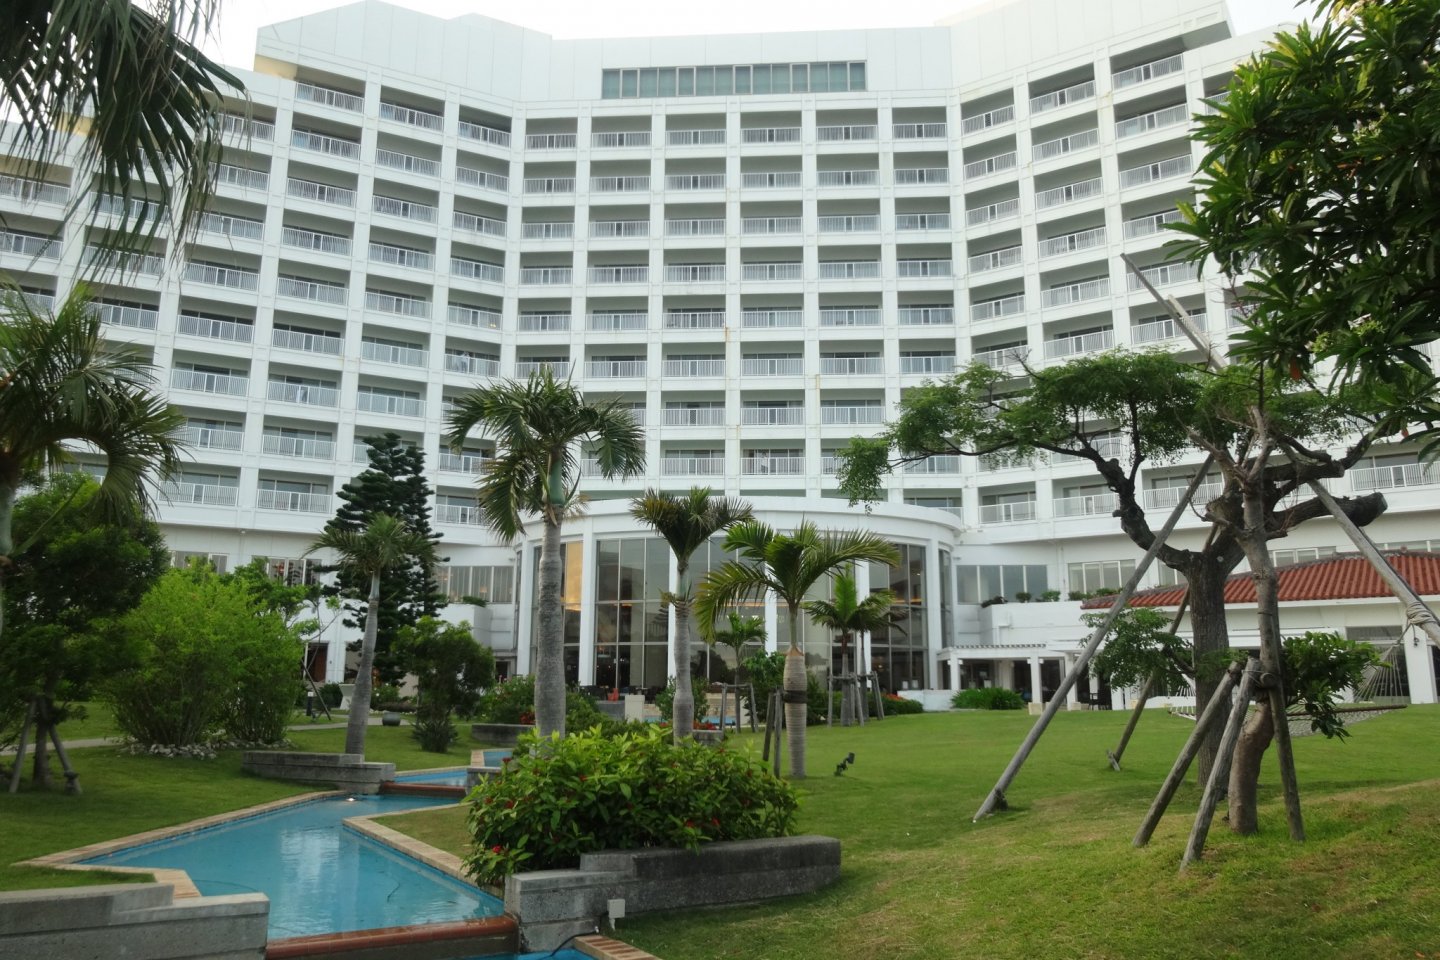 The ANA Intercontinental Resort in Ishigaki